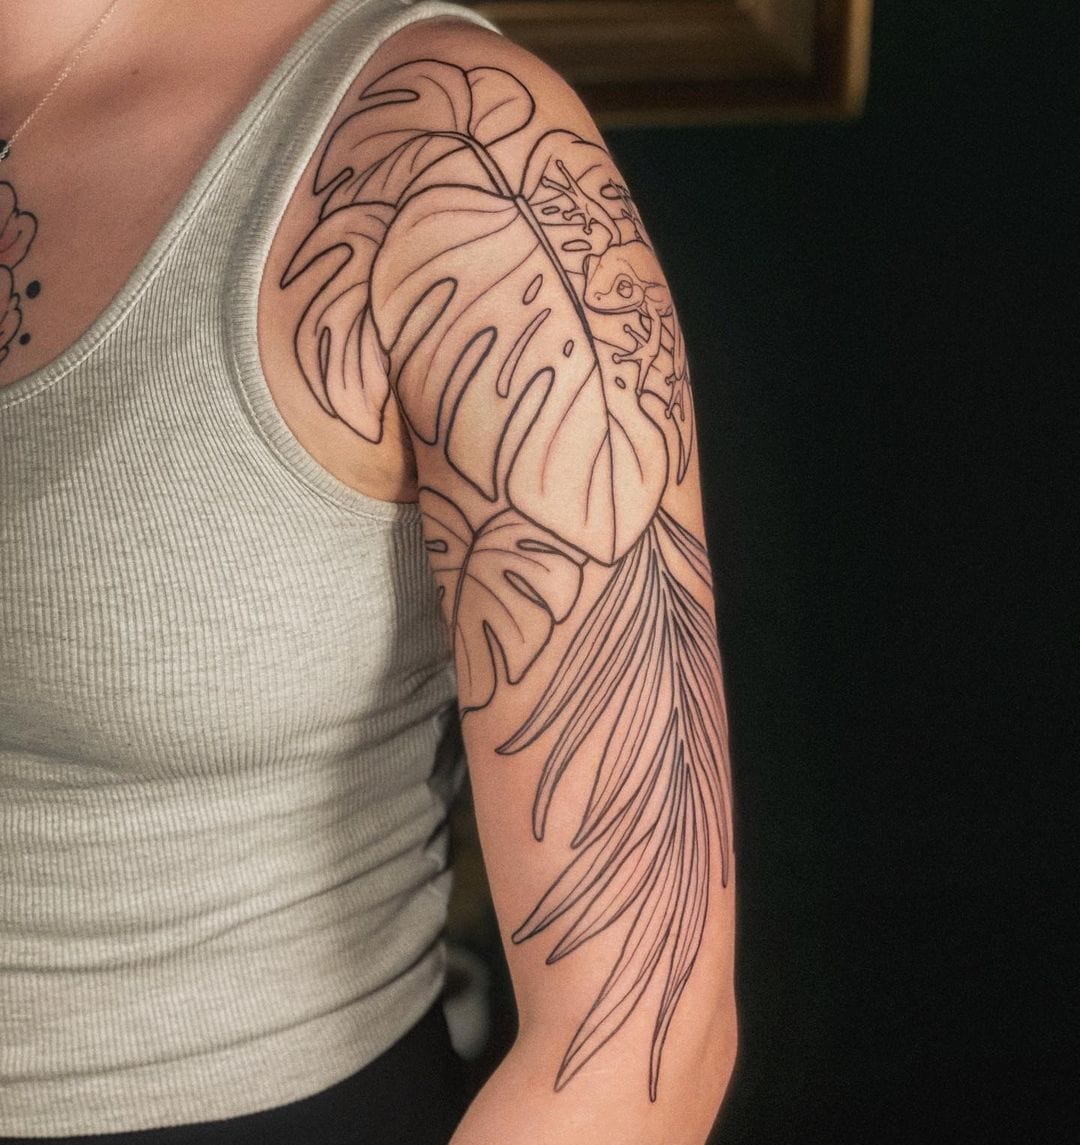 Palm leaf tattoo located on the forearm, illustrative